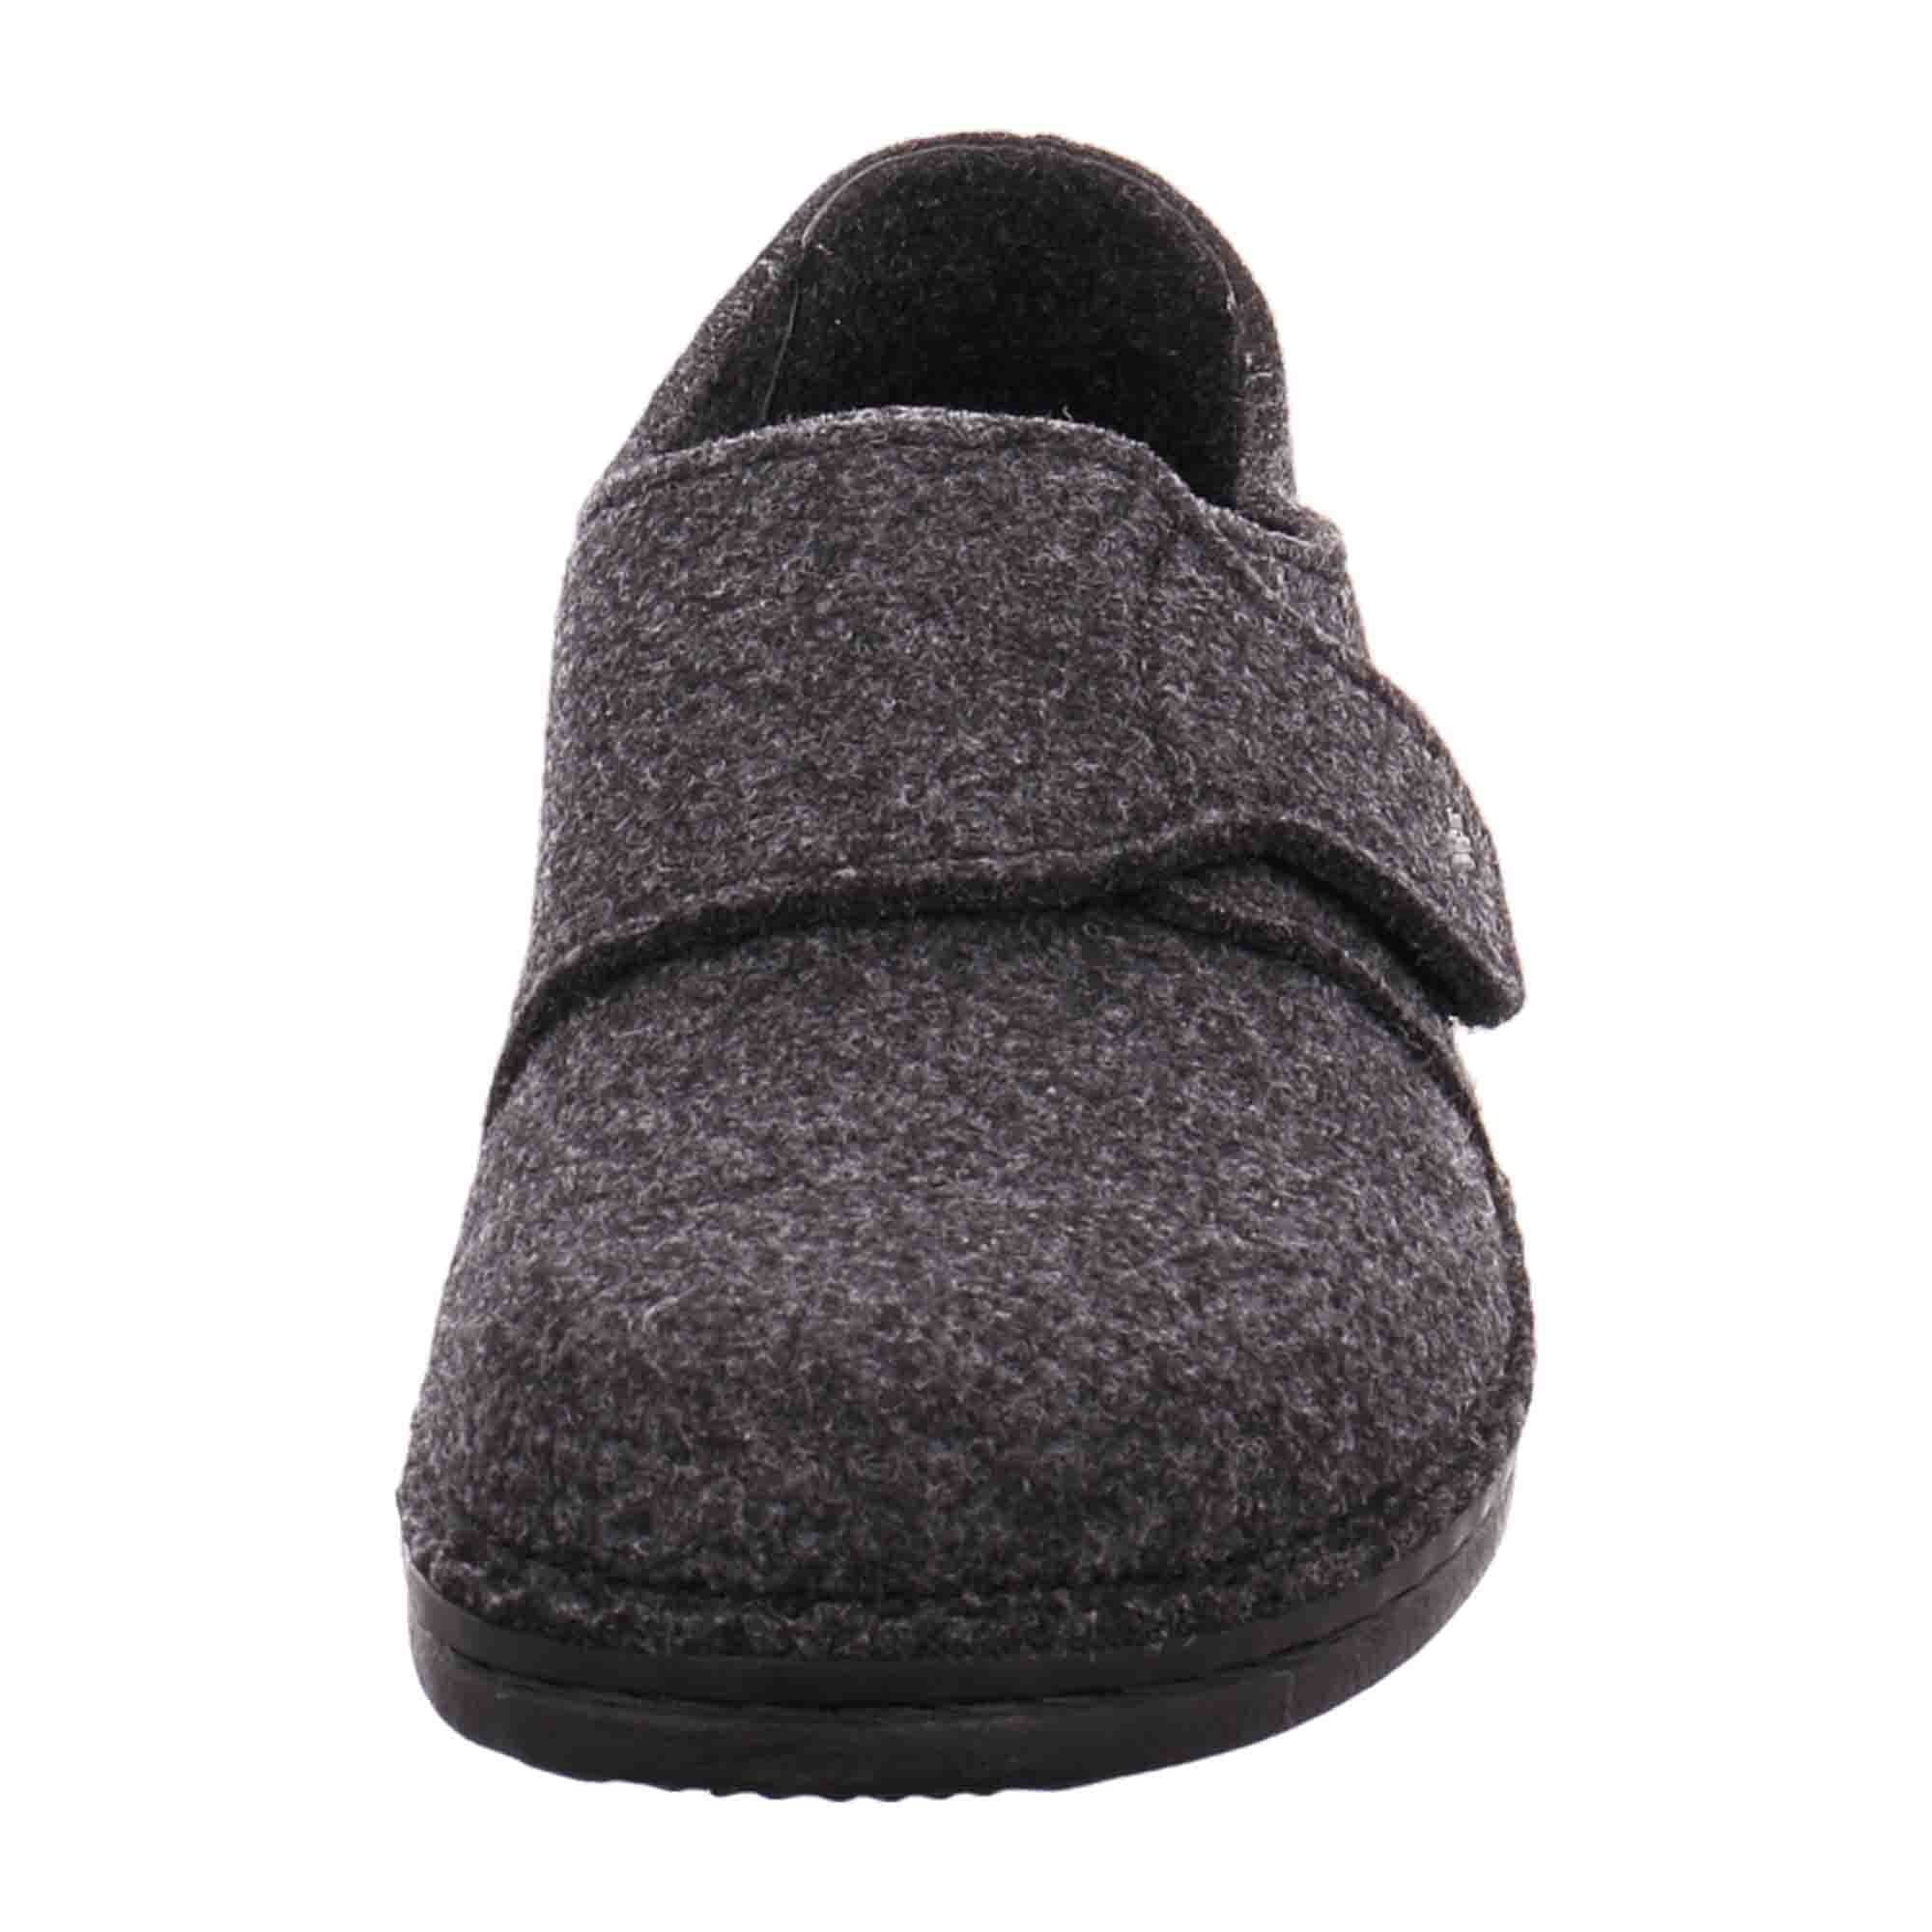 Finn Comfort Men's Slippers, Stylish & Comfortable - Grey